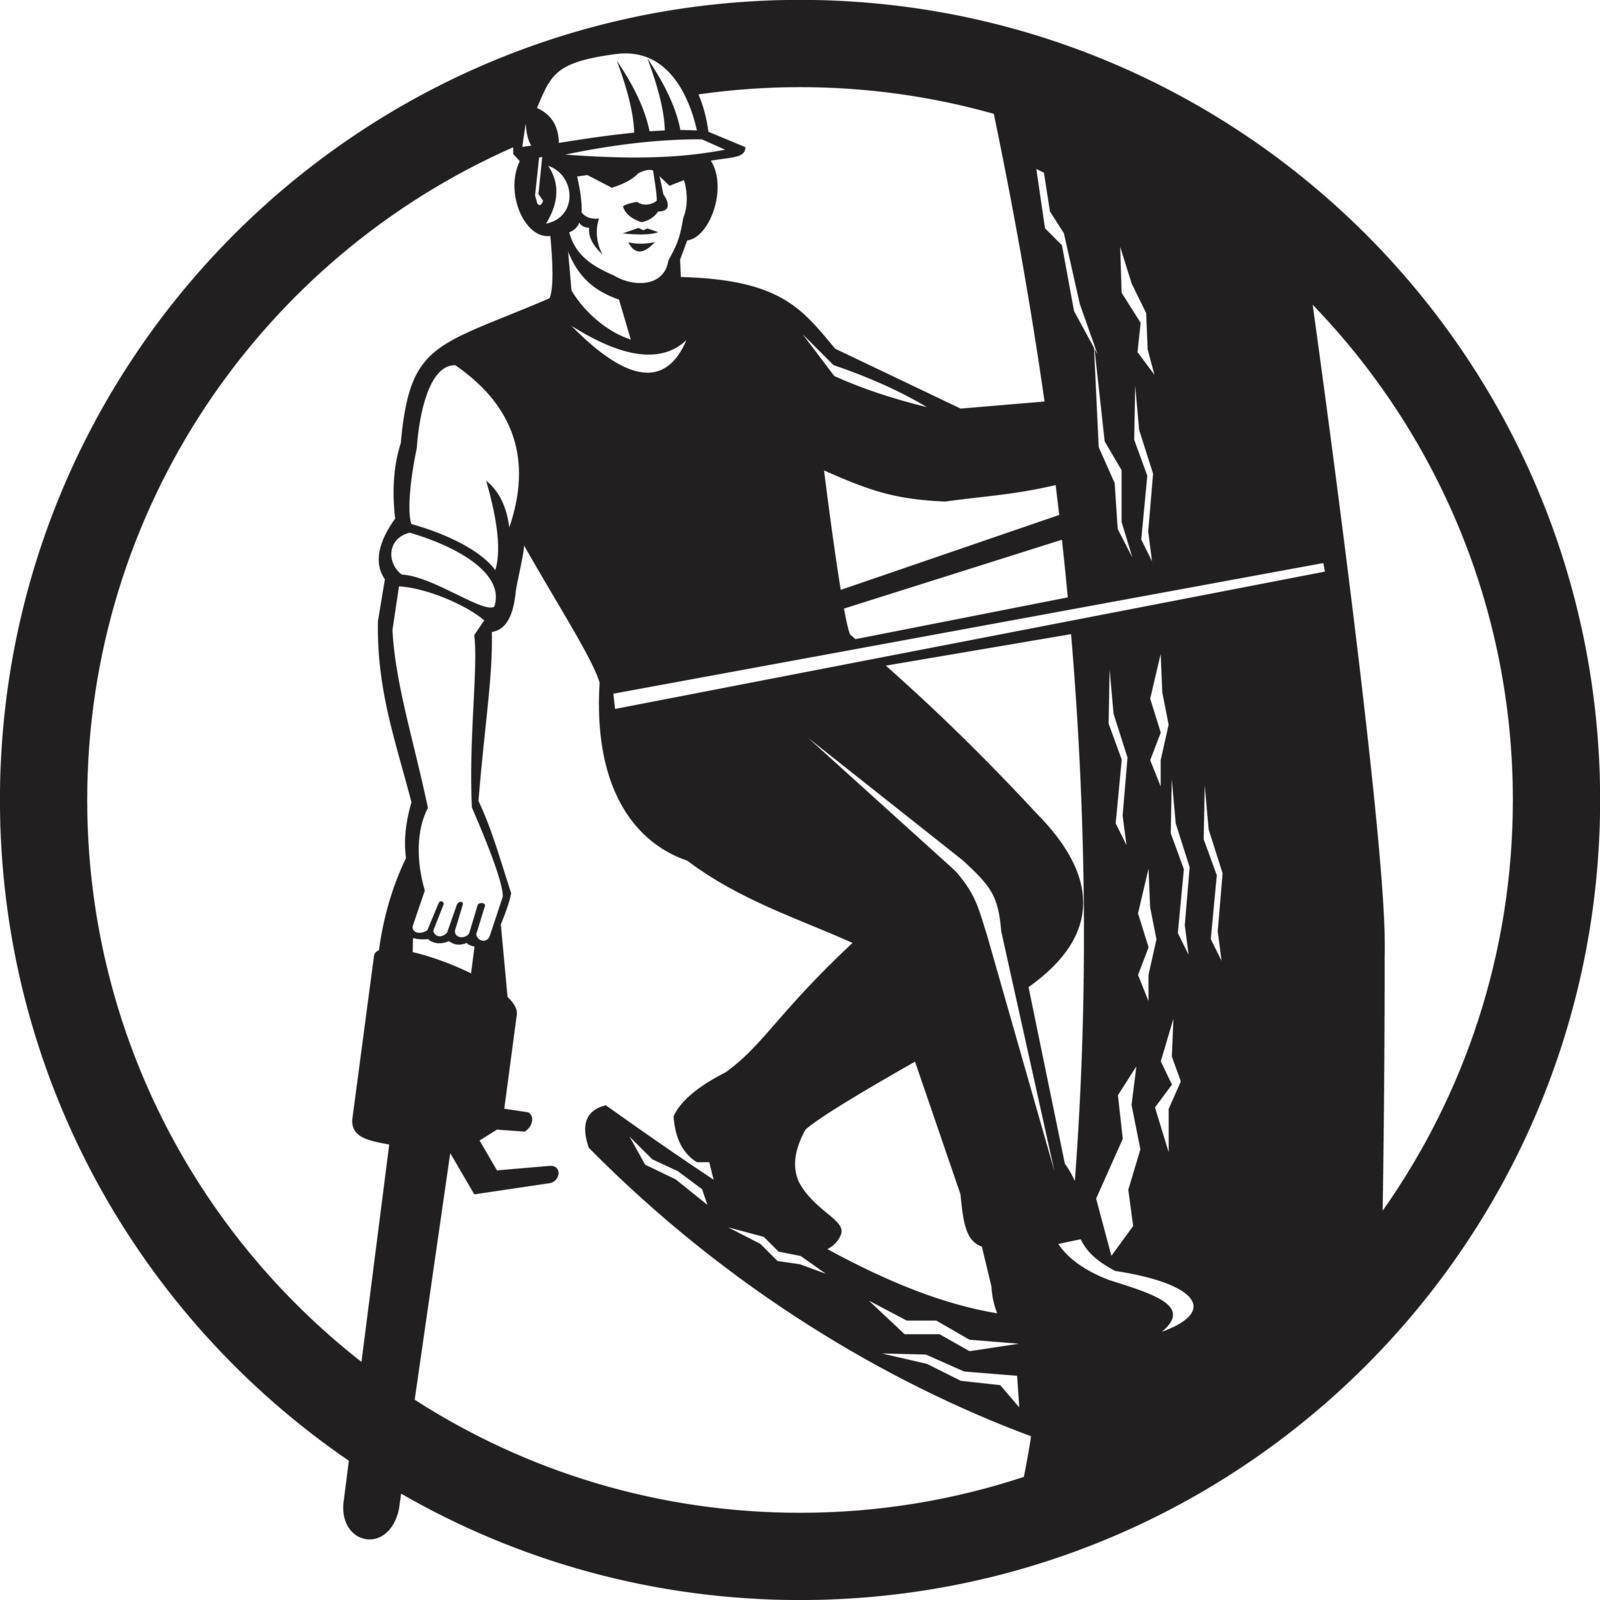 Tree Surgeon or Arborist With Chainsaw Trimming Tree Black and White Retro by patrimonio